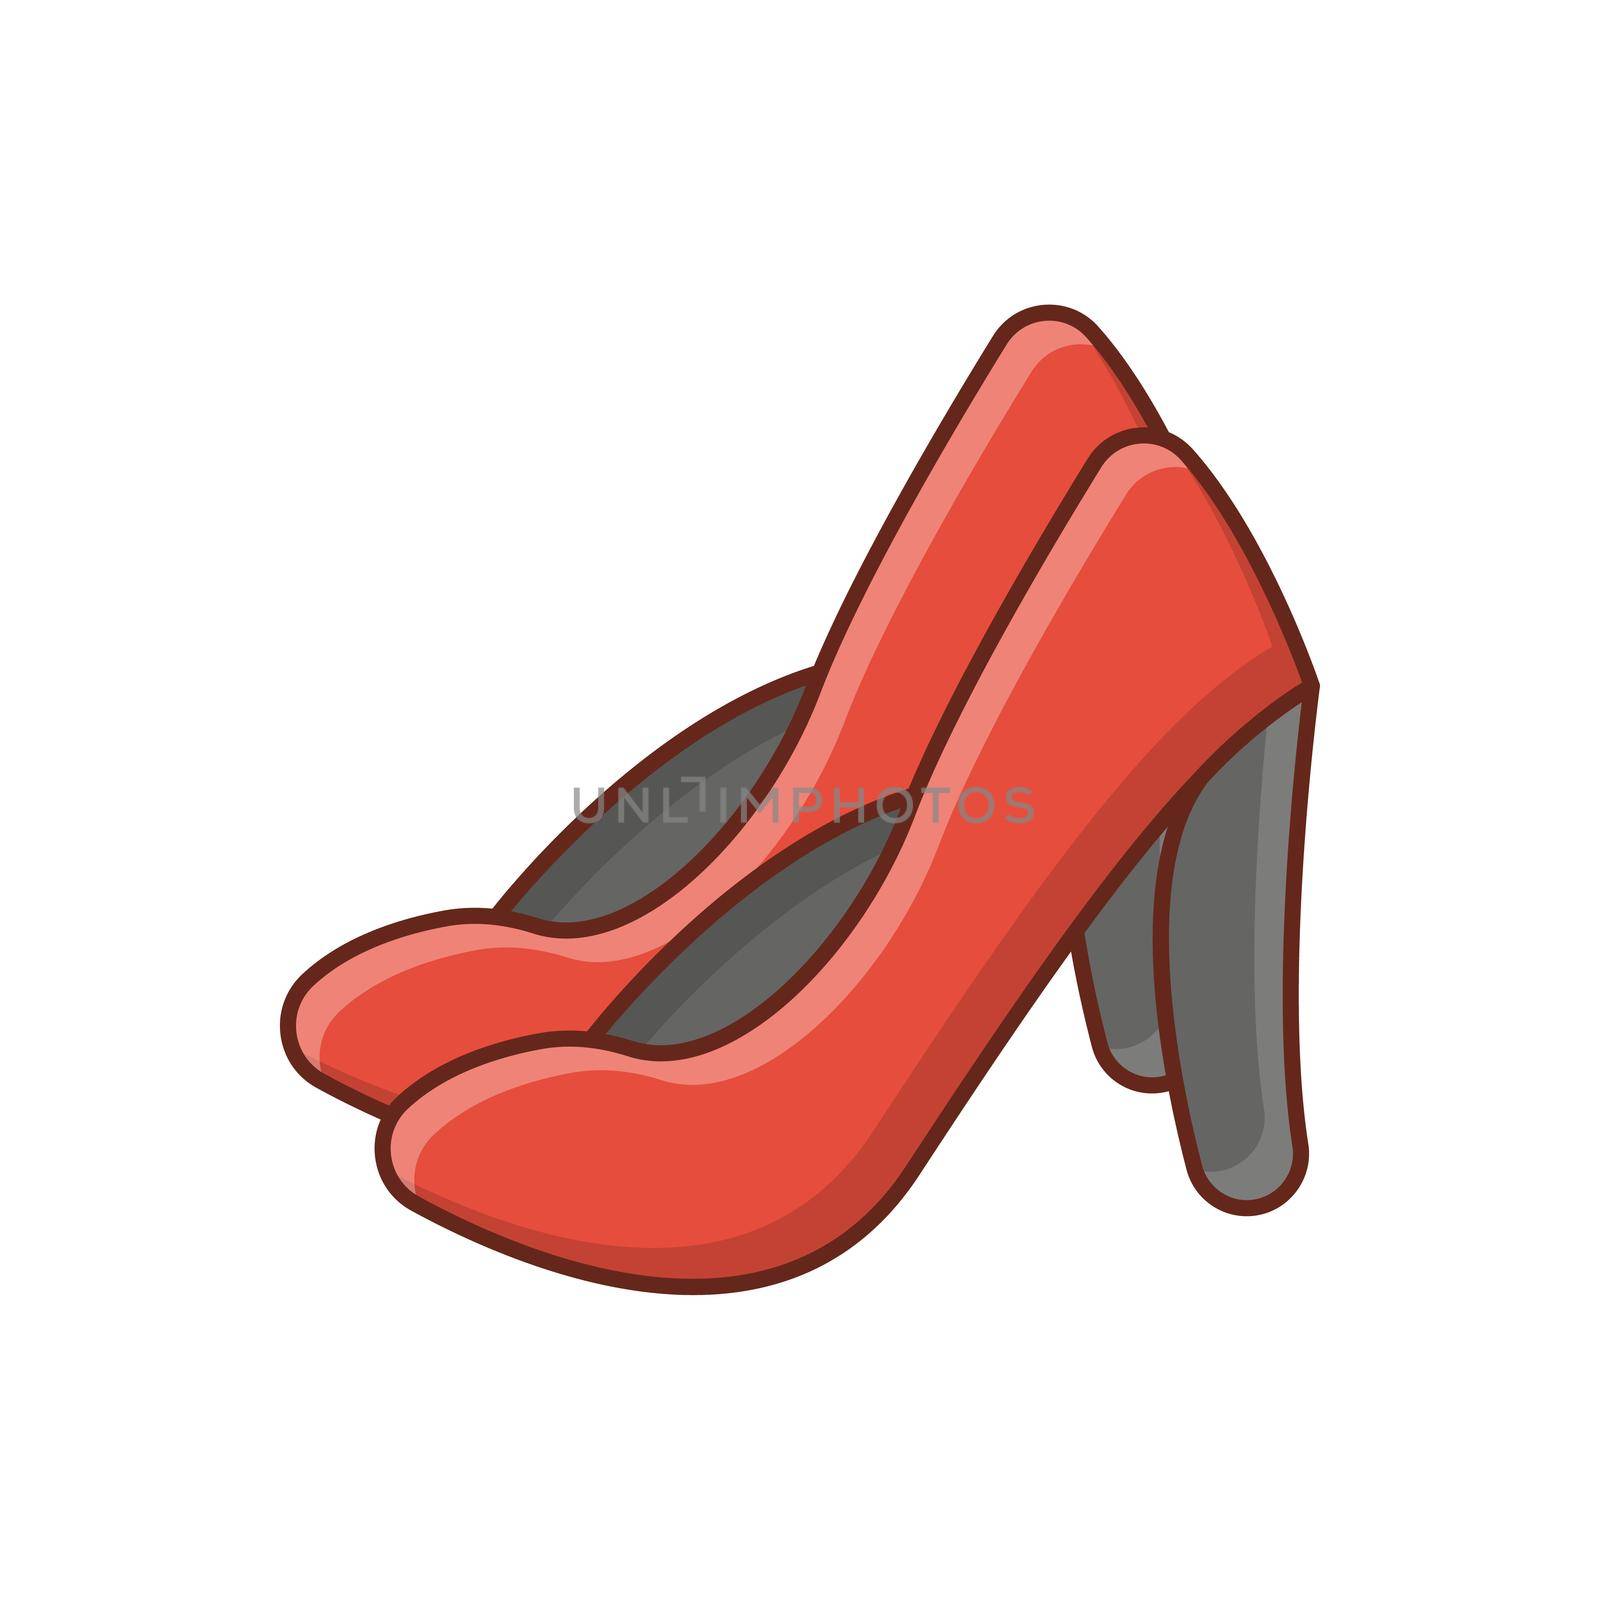 heel by FlaticonsDesign